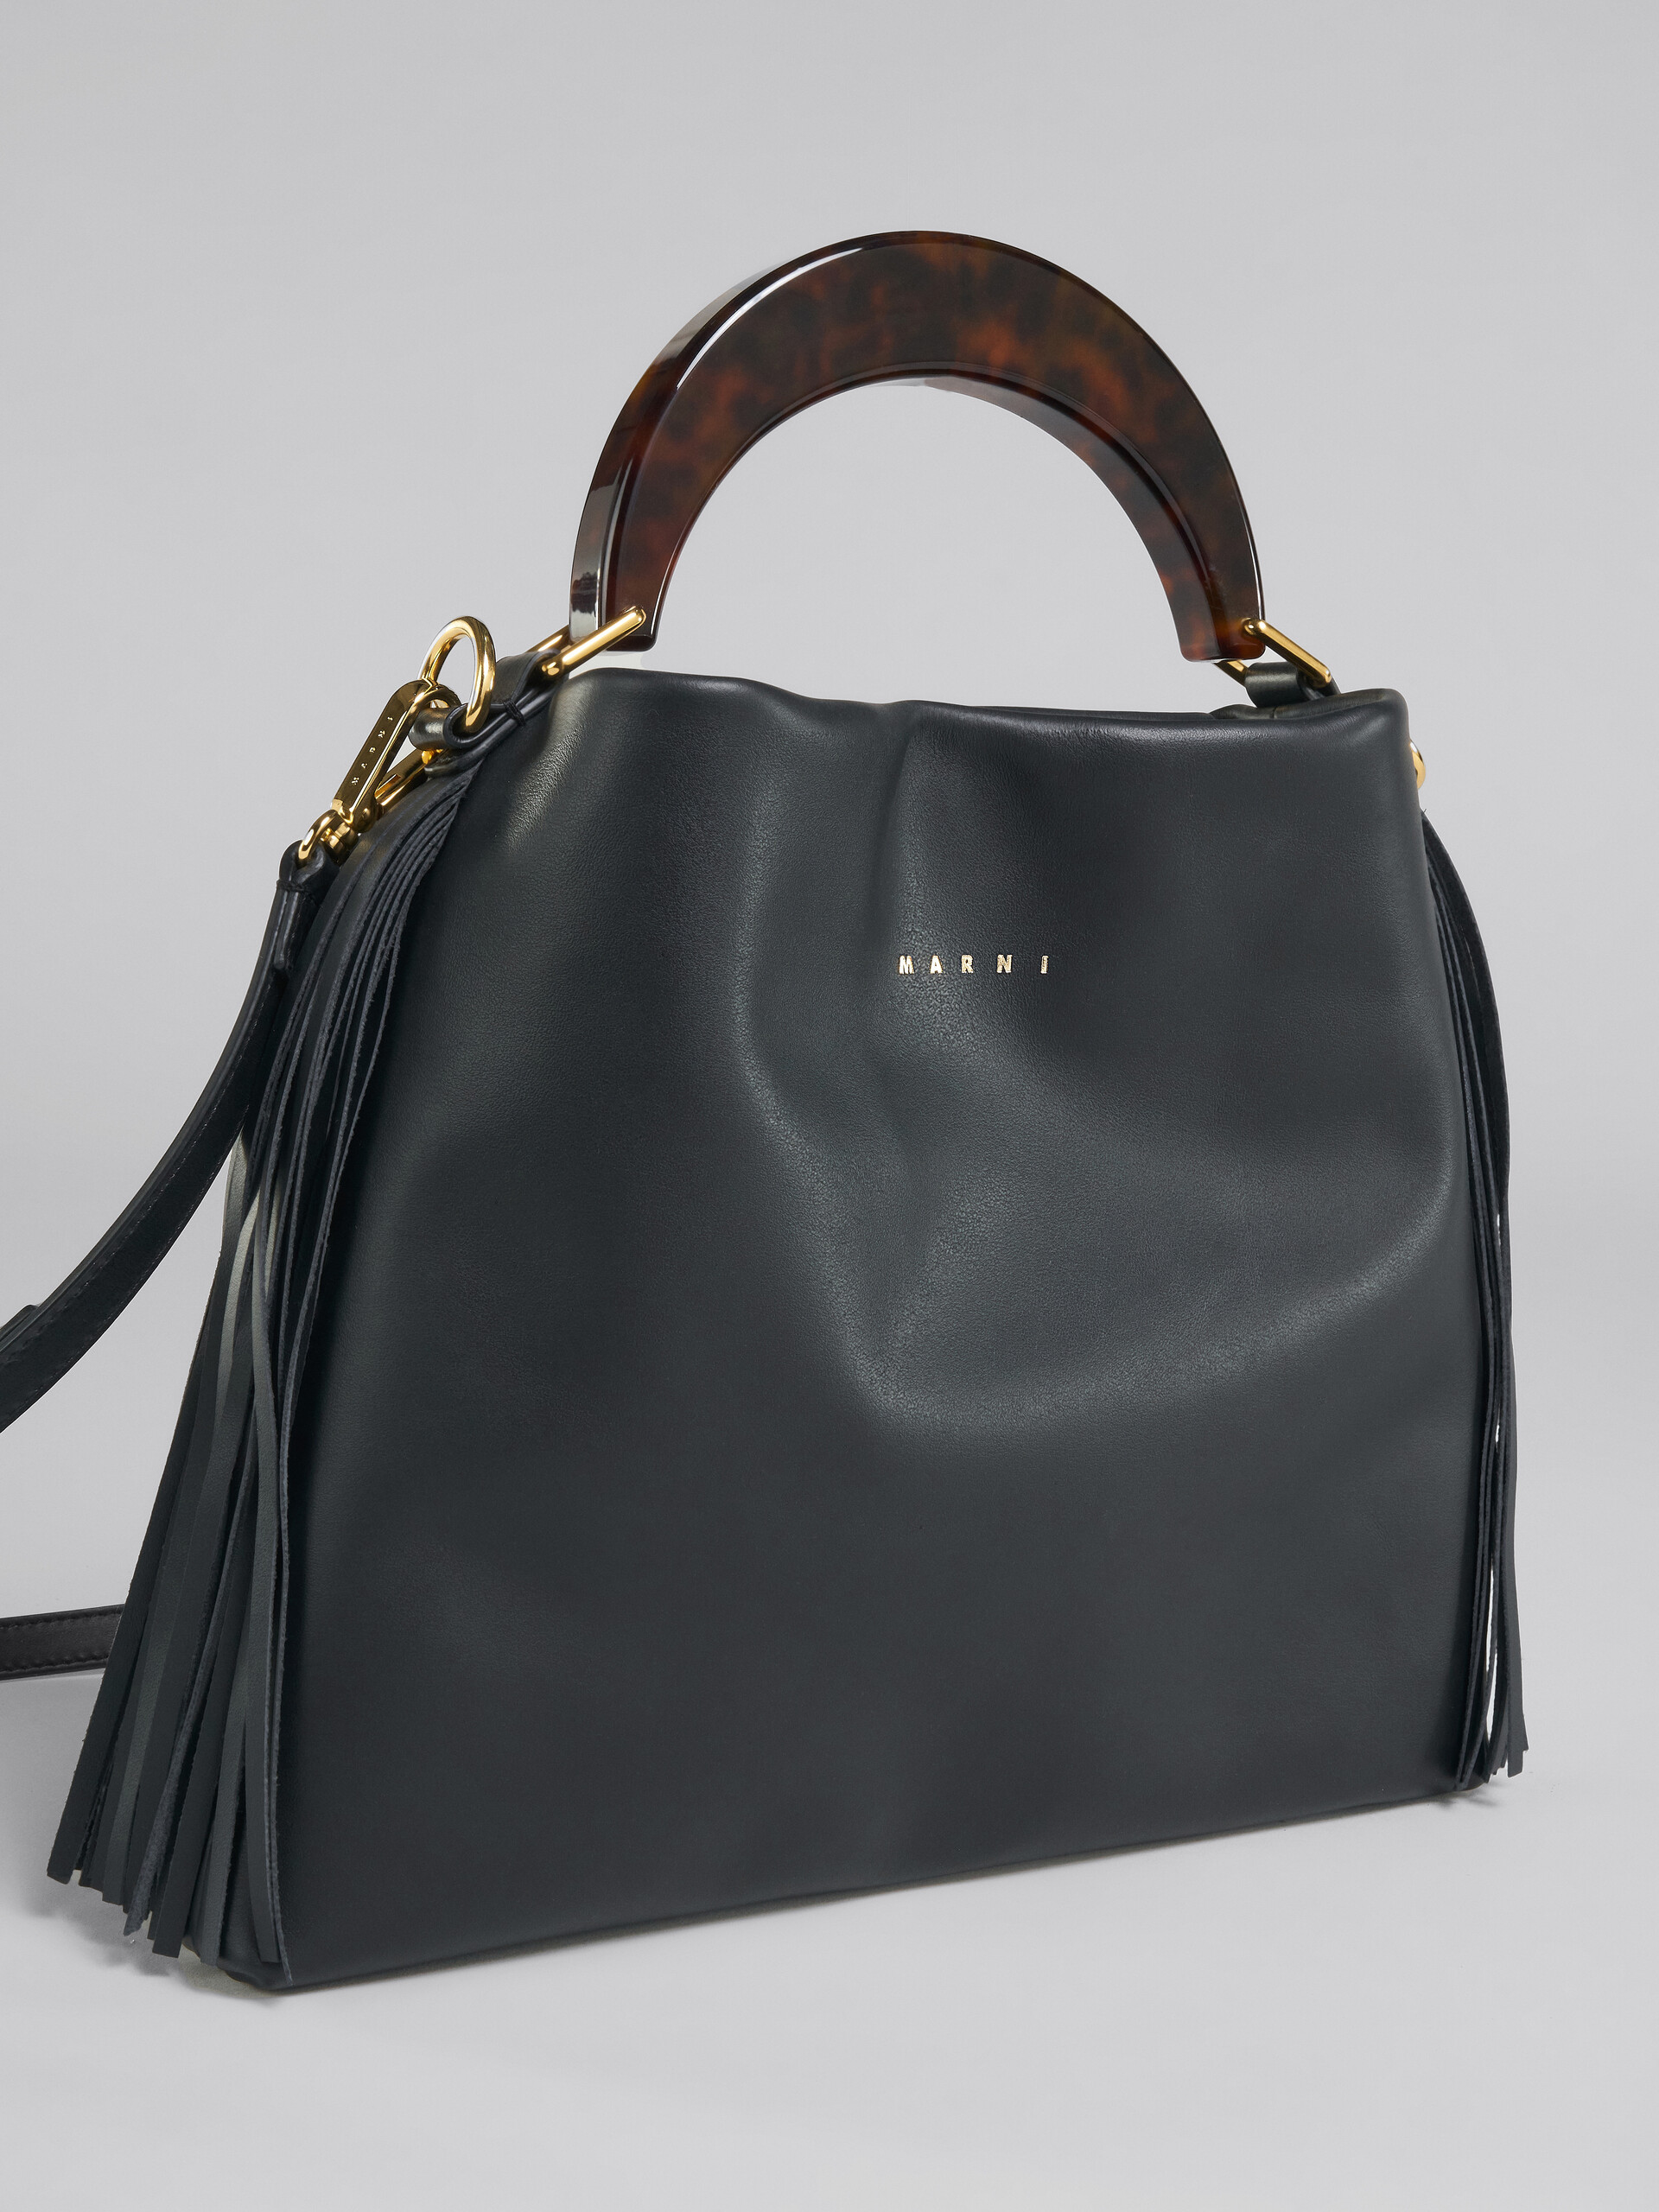 Venice Small Bag in black leather with fringes - Shoulder Bag - Image 5